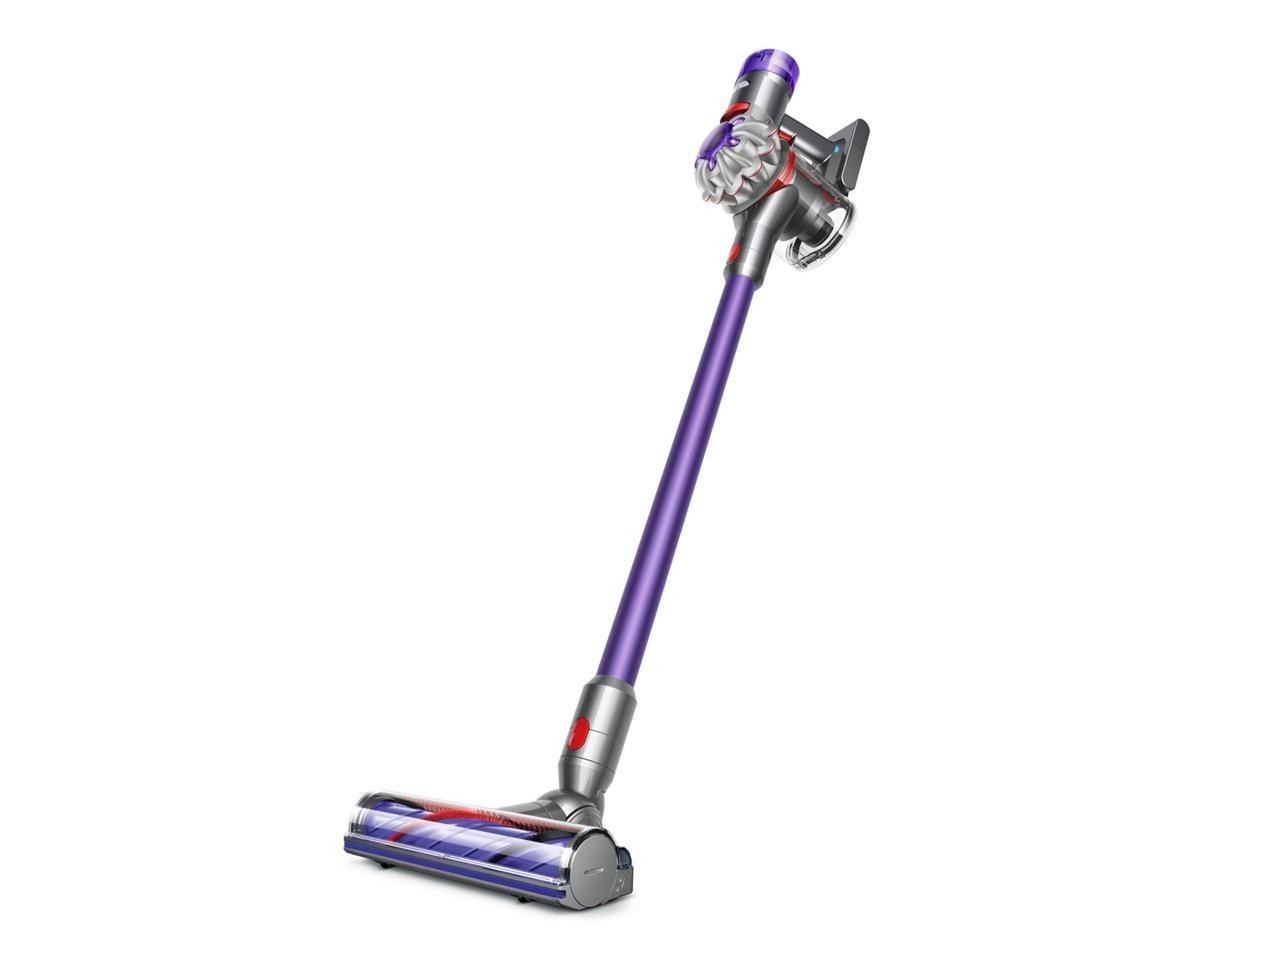 Dyson V8 Origin+ Cordless Stick Vacuum (Purple) $250 + Free Shipping